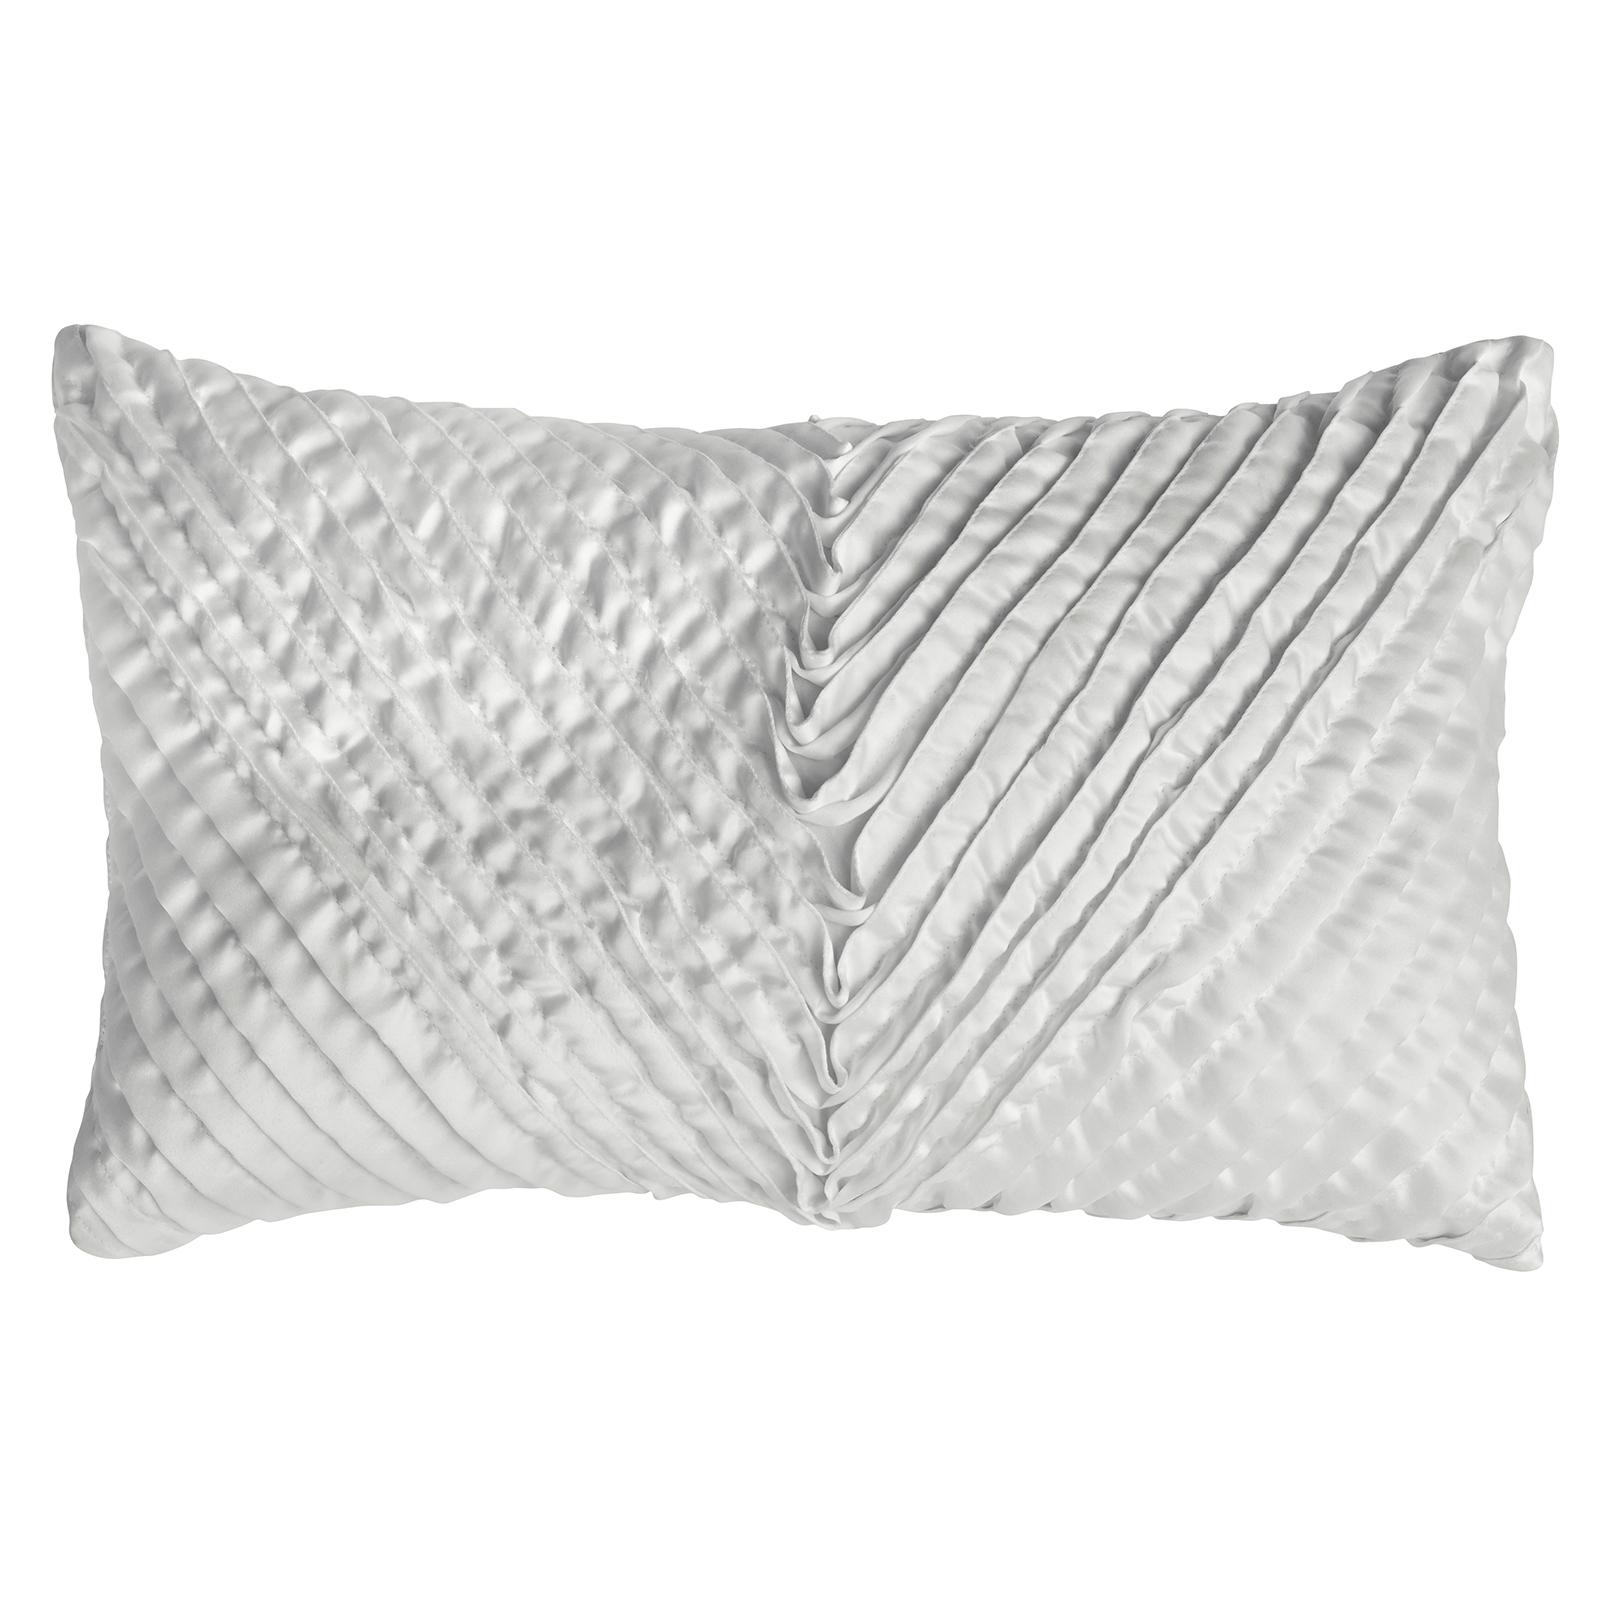 Kardashian Kollection White Hot Decorative Pillow - Pleated